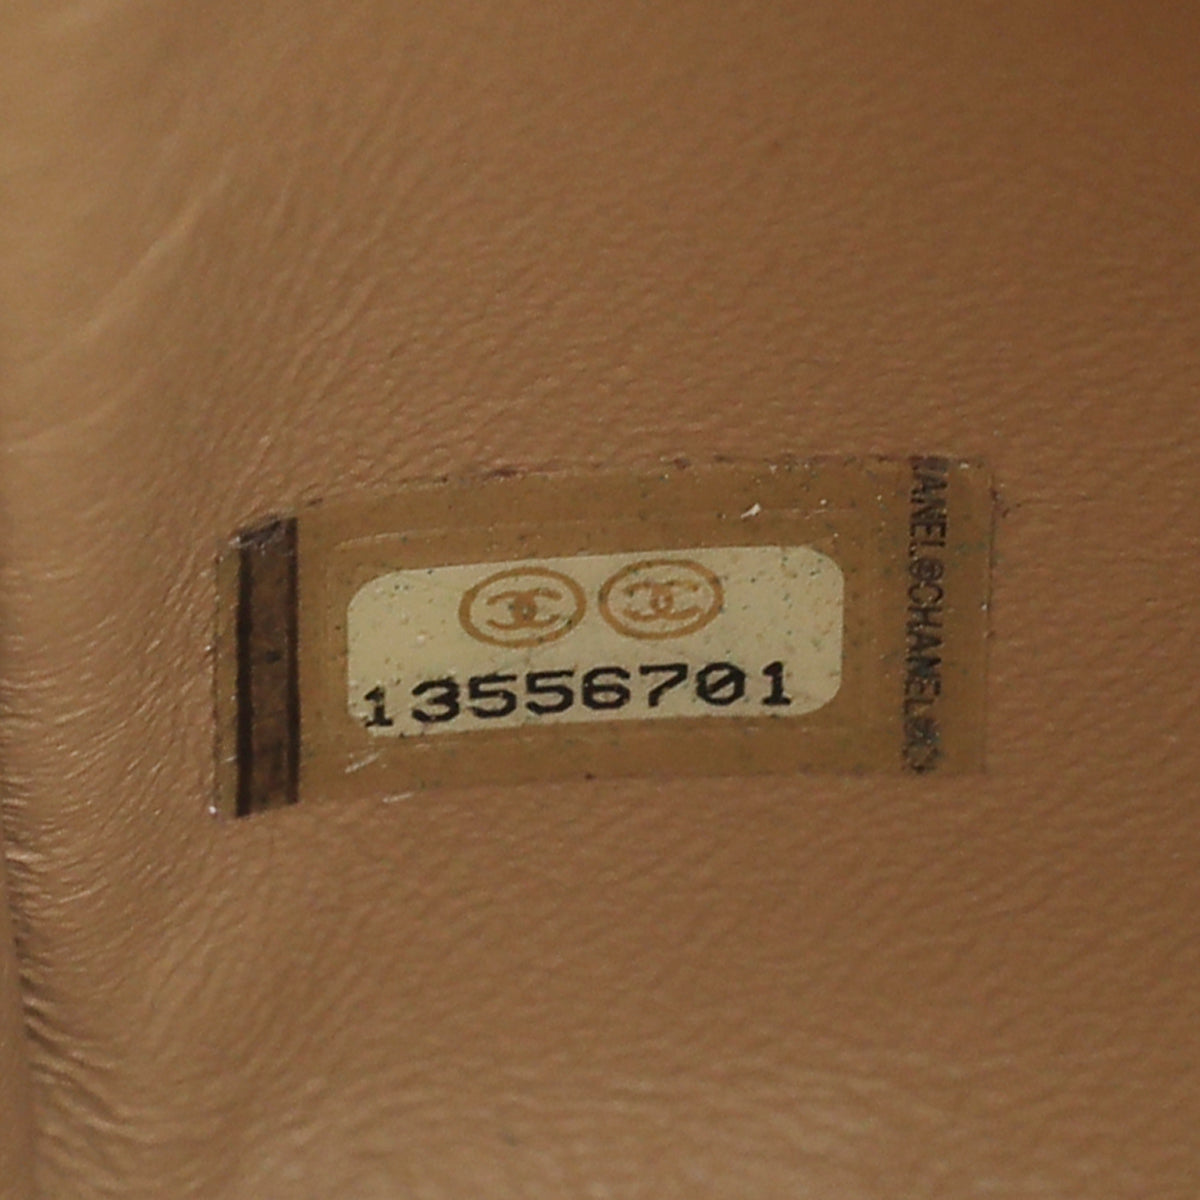 Chanel Gold CC Classic Single Flap Jumbo Bag